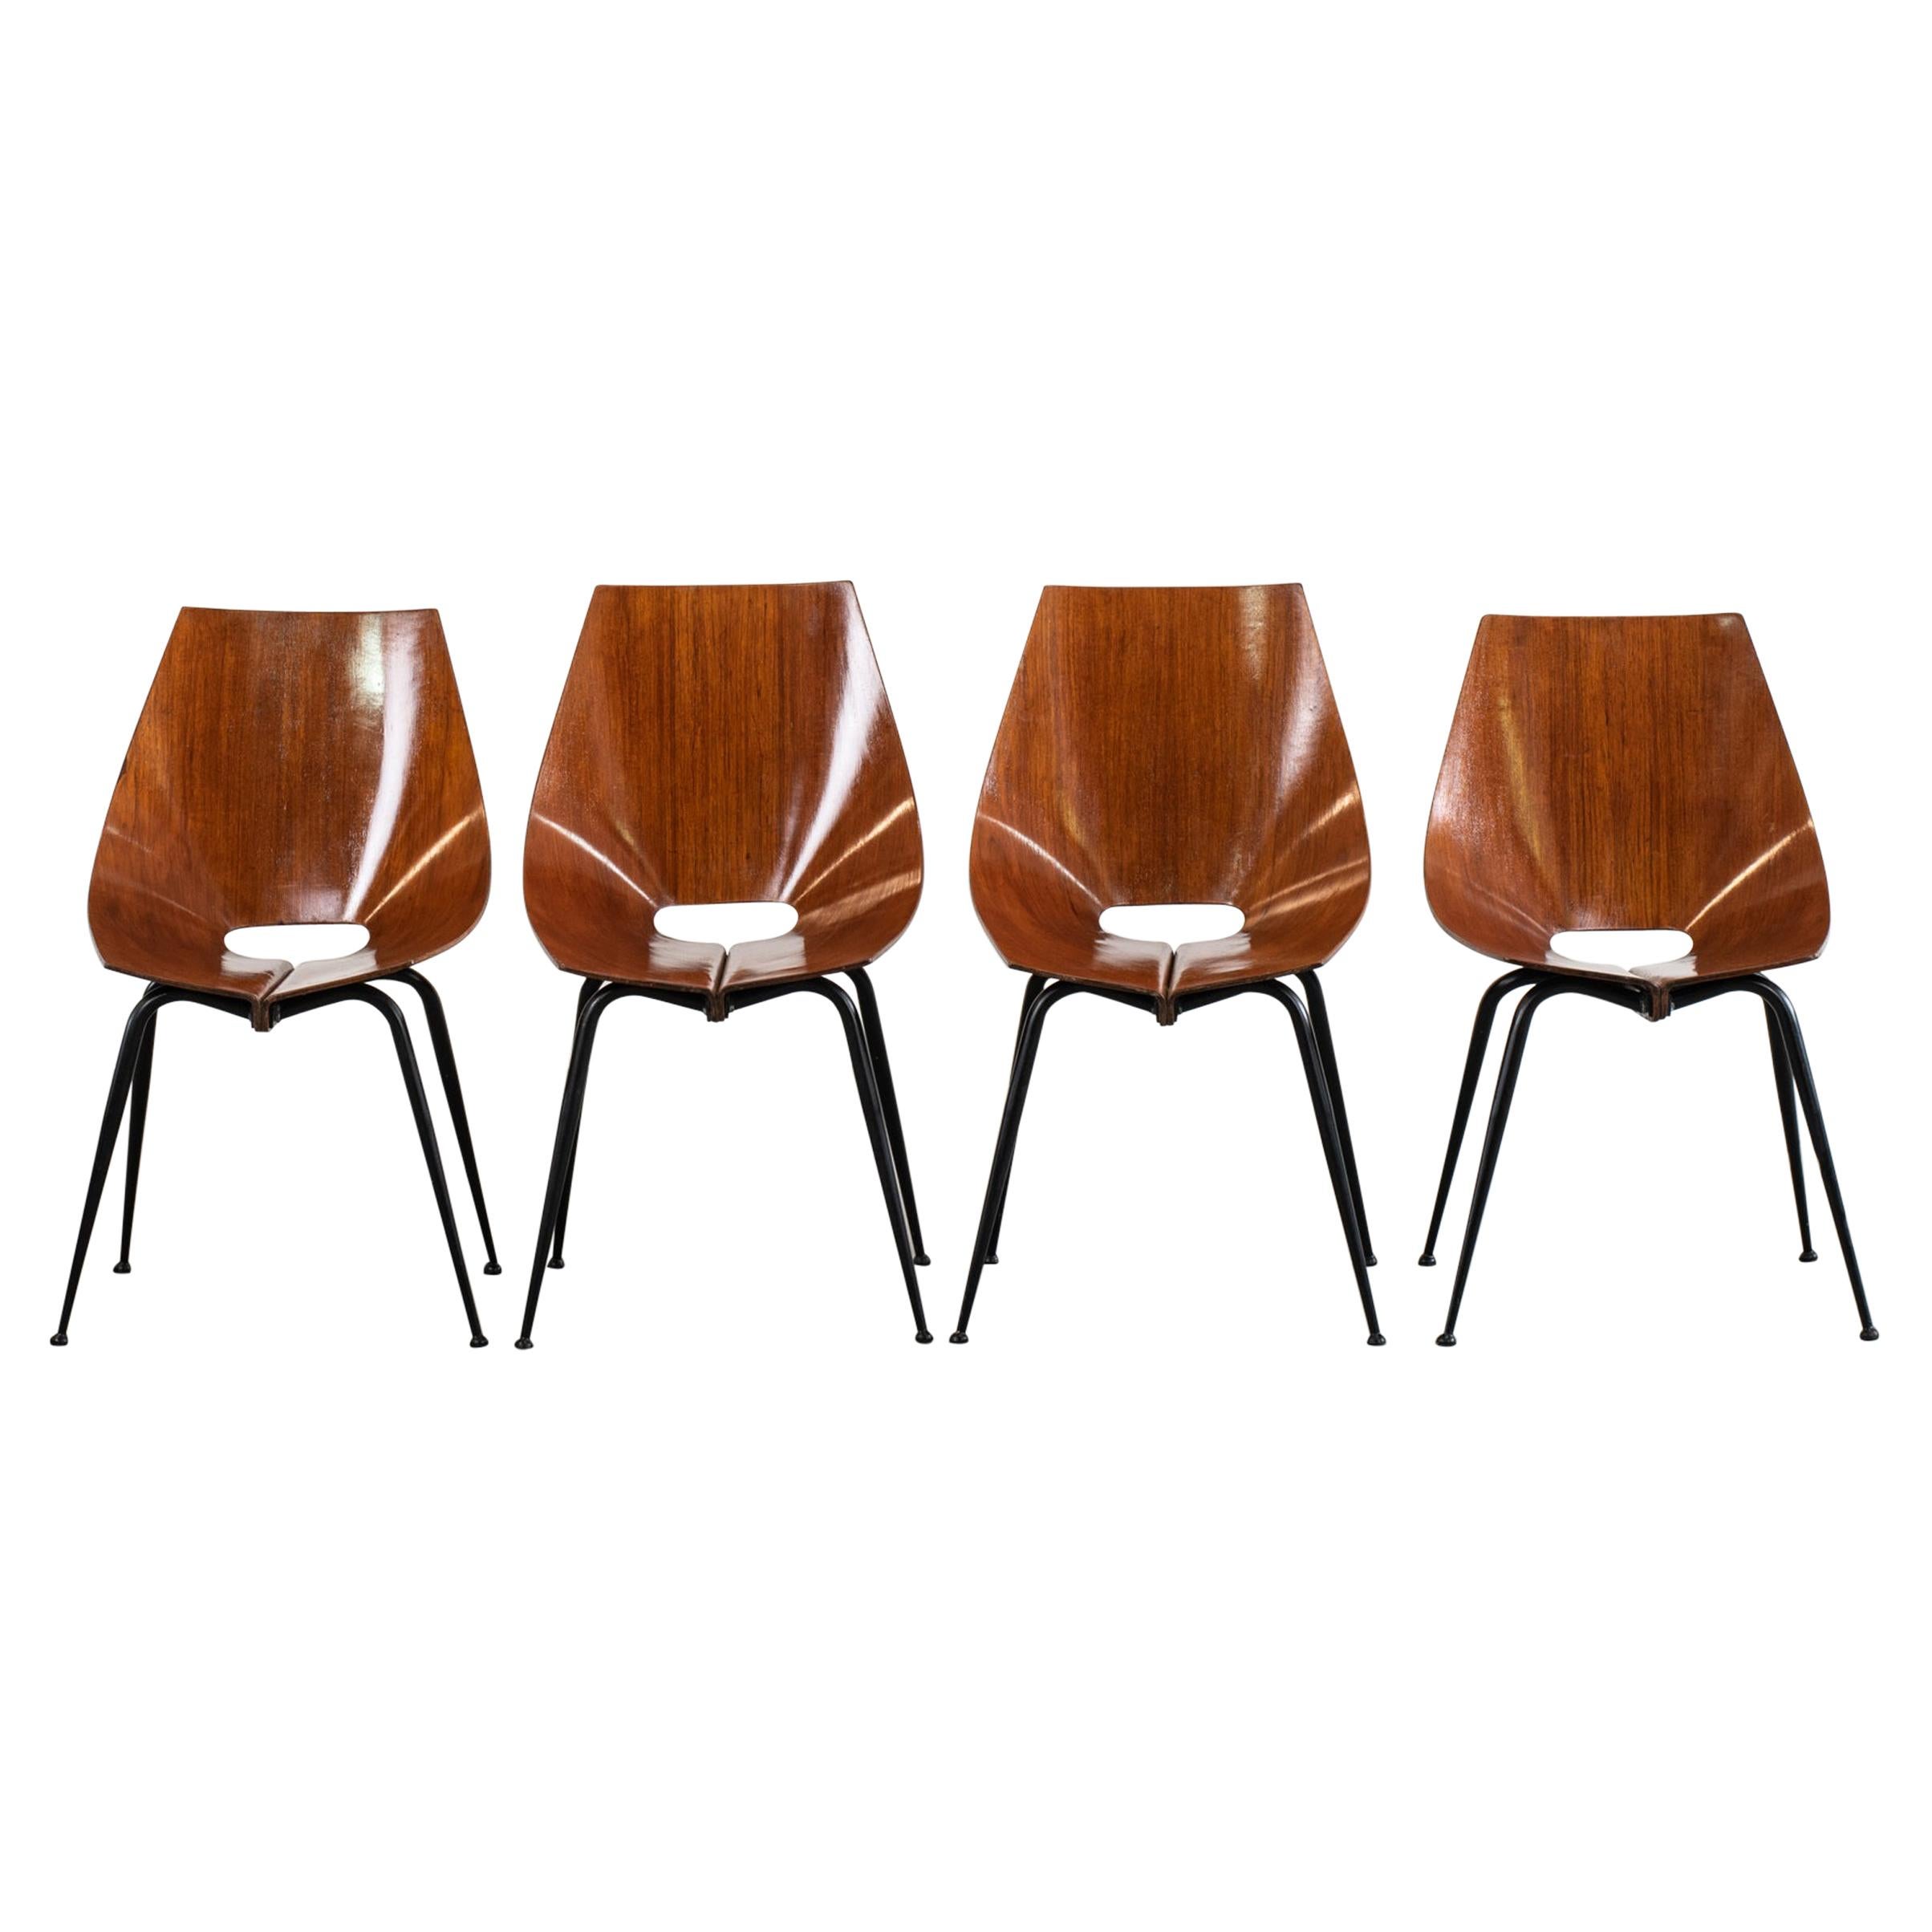 Carlo Ratti Set of Four Chairs in Plywood by Società Compensati Curvi 1950s For Sale